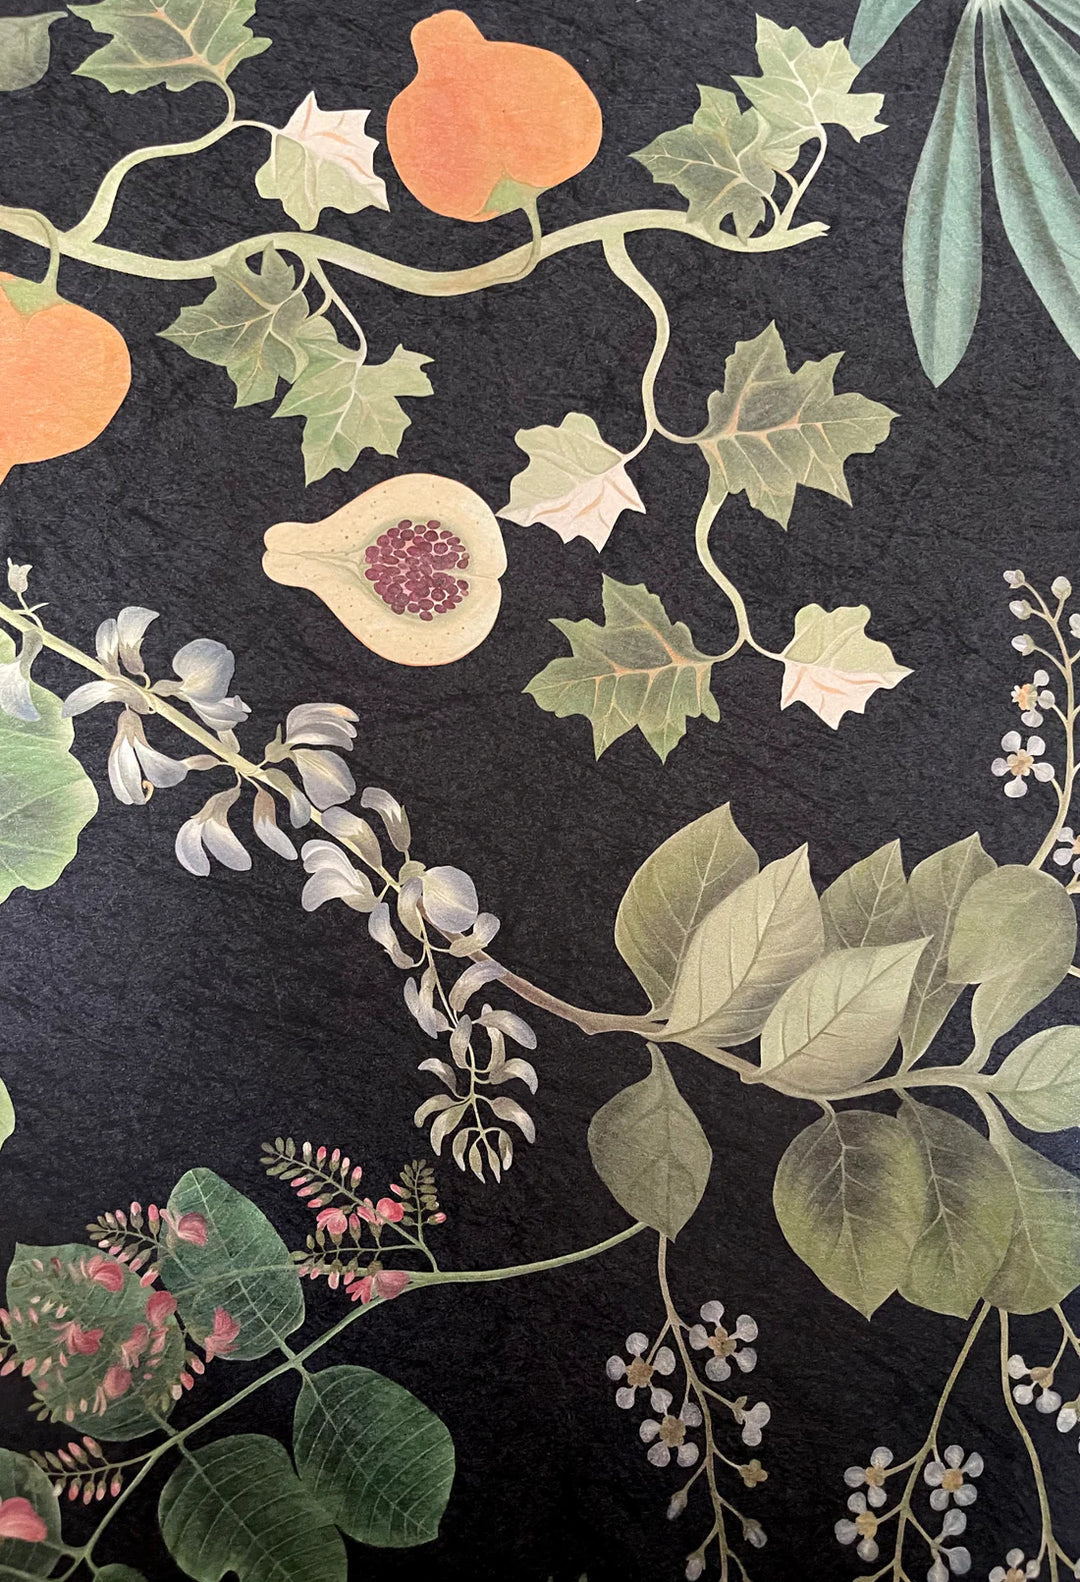 Deus-ex-gardenia-wallpaper-eden-night-botanical-print-hand-illustrated-exotic-palms-forbidden-fruits-print-night-green-pink-blue-orange-print-black-background